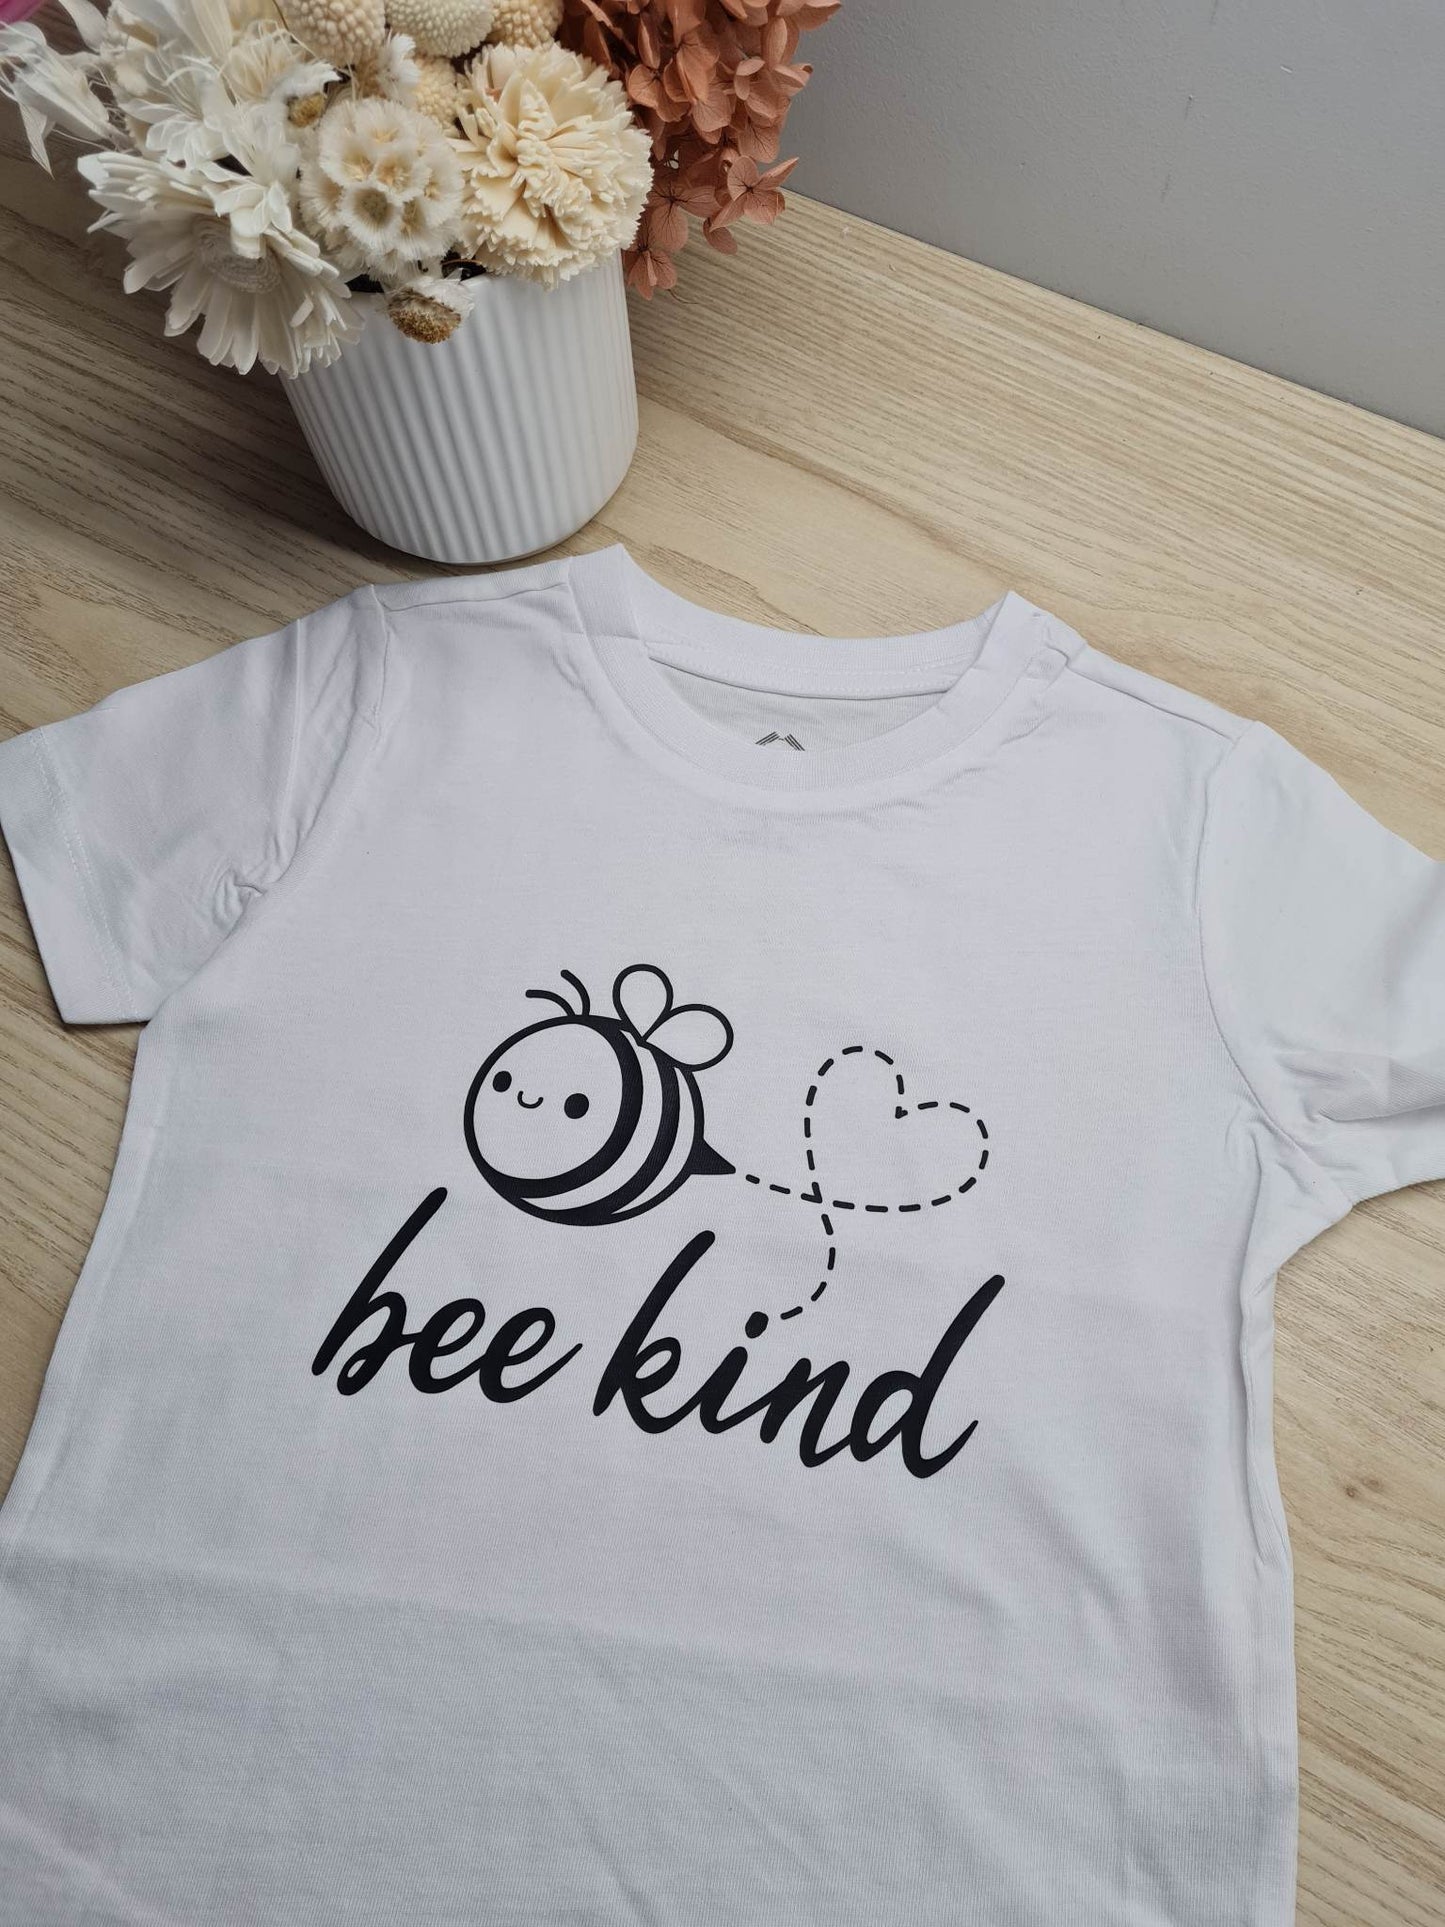 Kids Harmony Day Shirt - Bee Kind